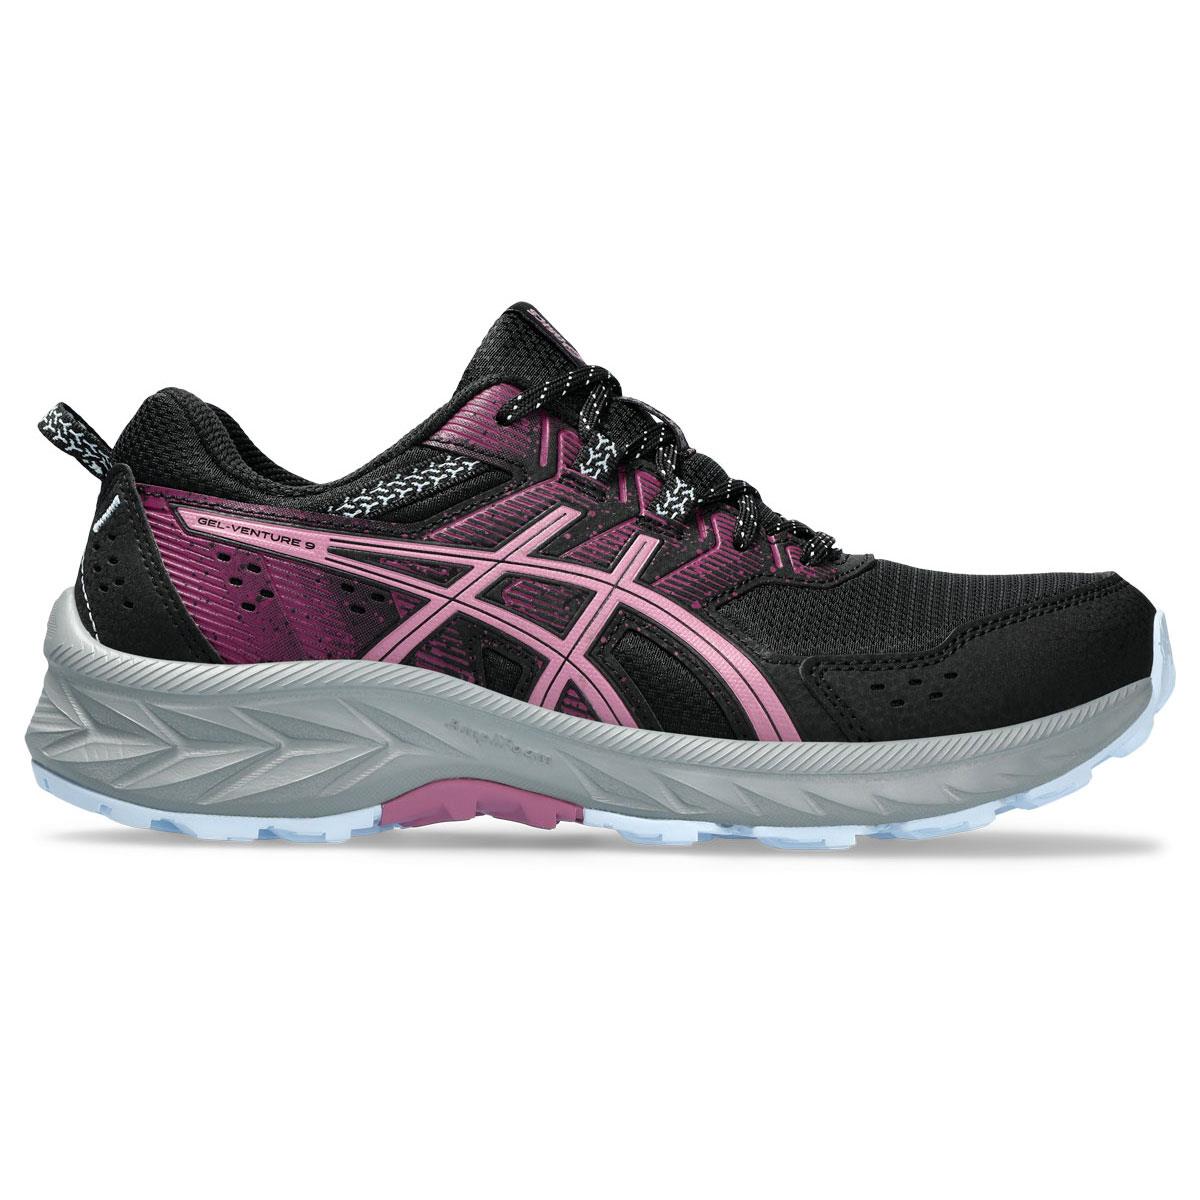 Asics Venture 9 Womens Trail Running Shoes Black/purple US 8.5